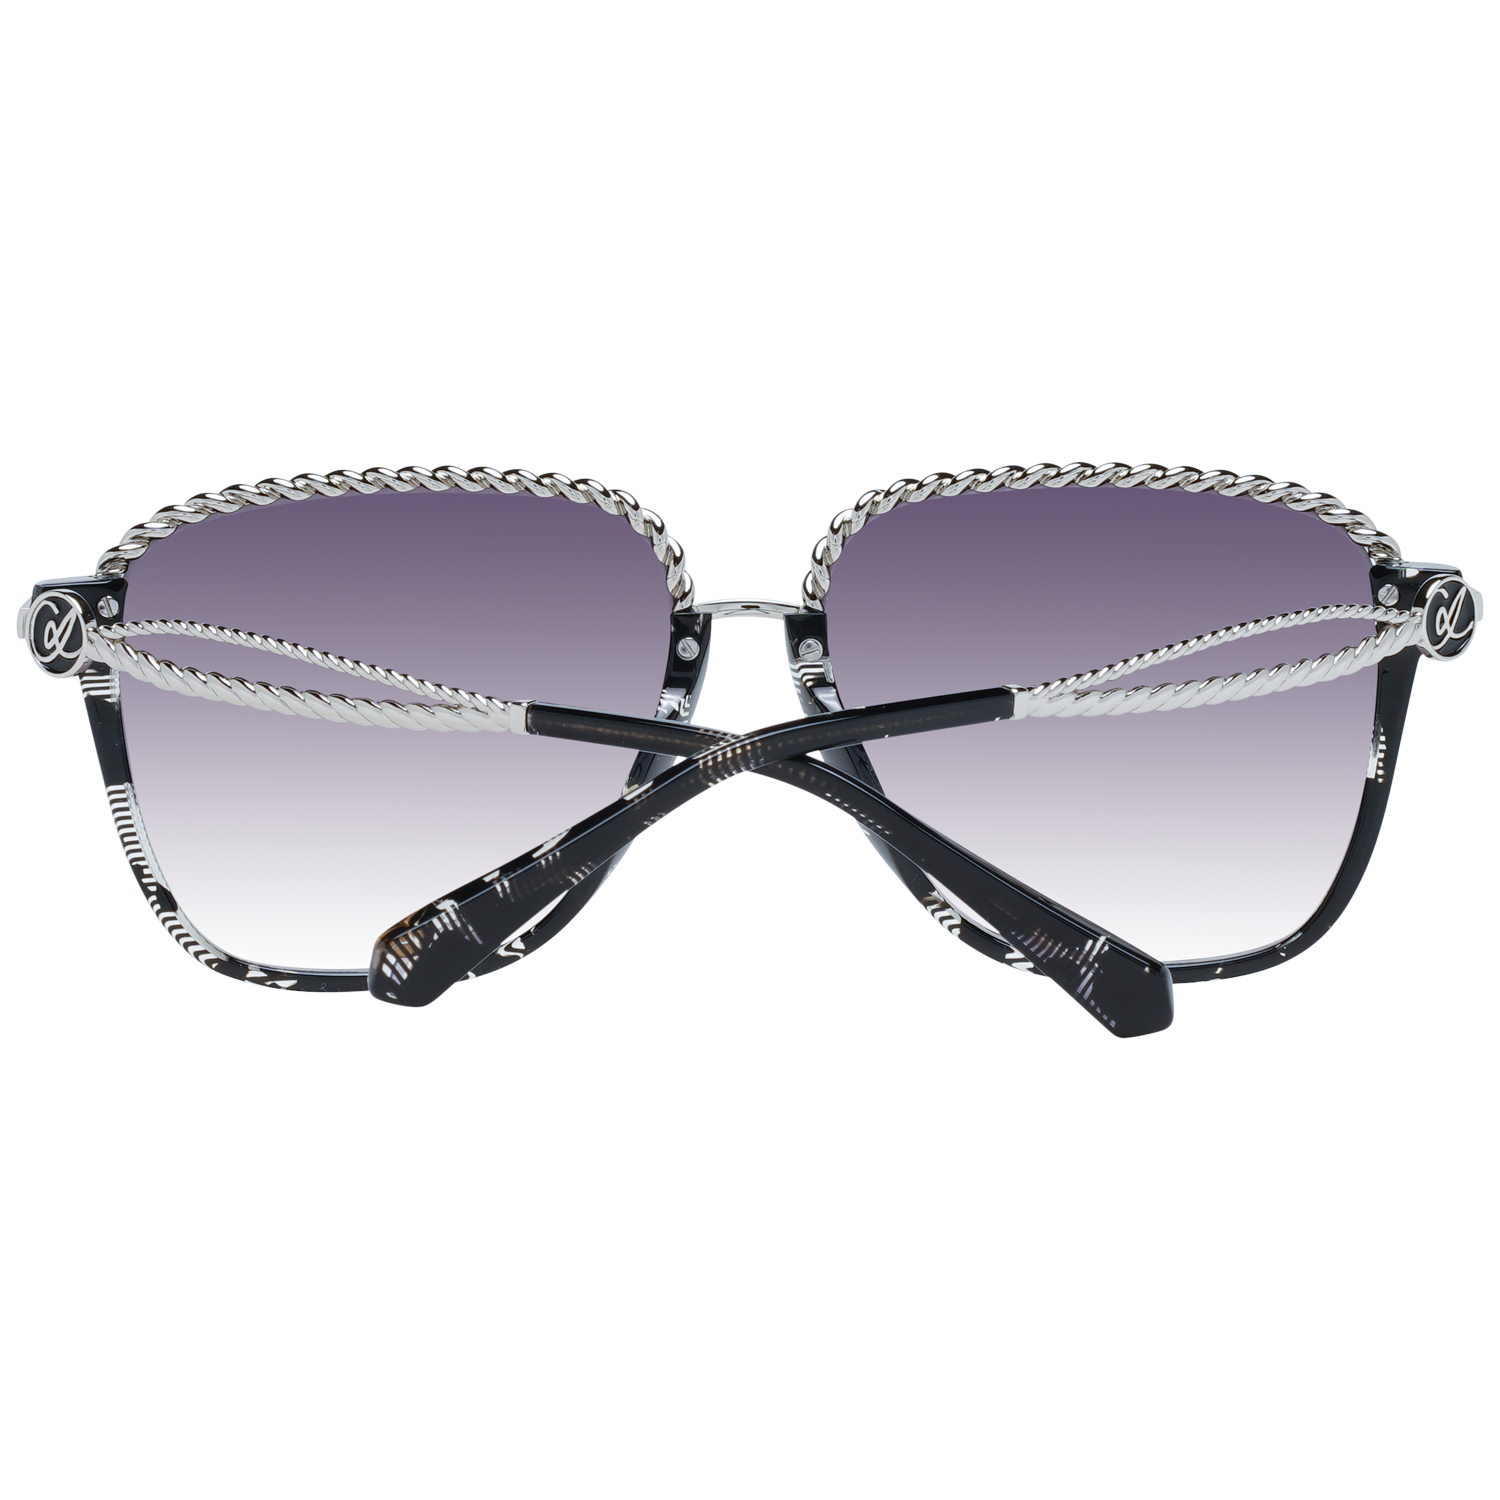 Christian Lacroix Sunglasses Christian Lacroix Sunglasses CL5097 41 59 Eyeglasses Eyewear UK USA Australia 